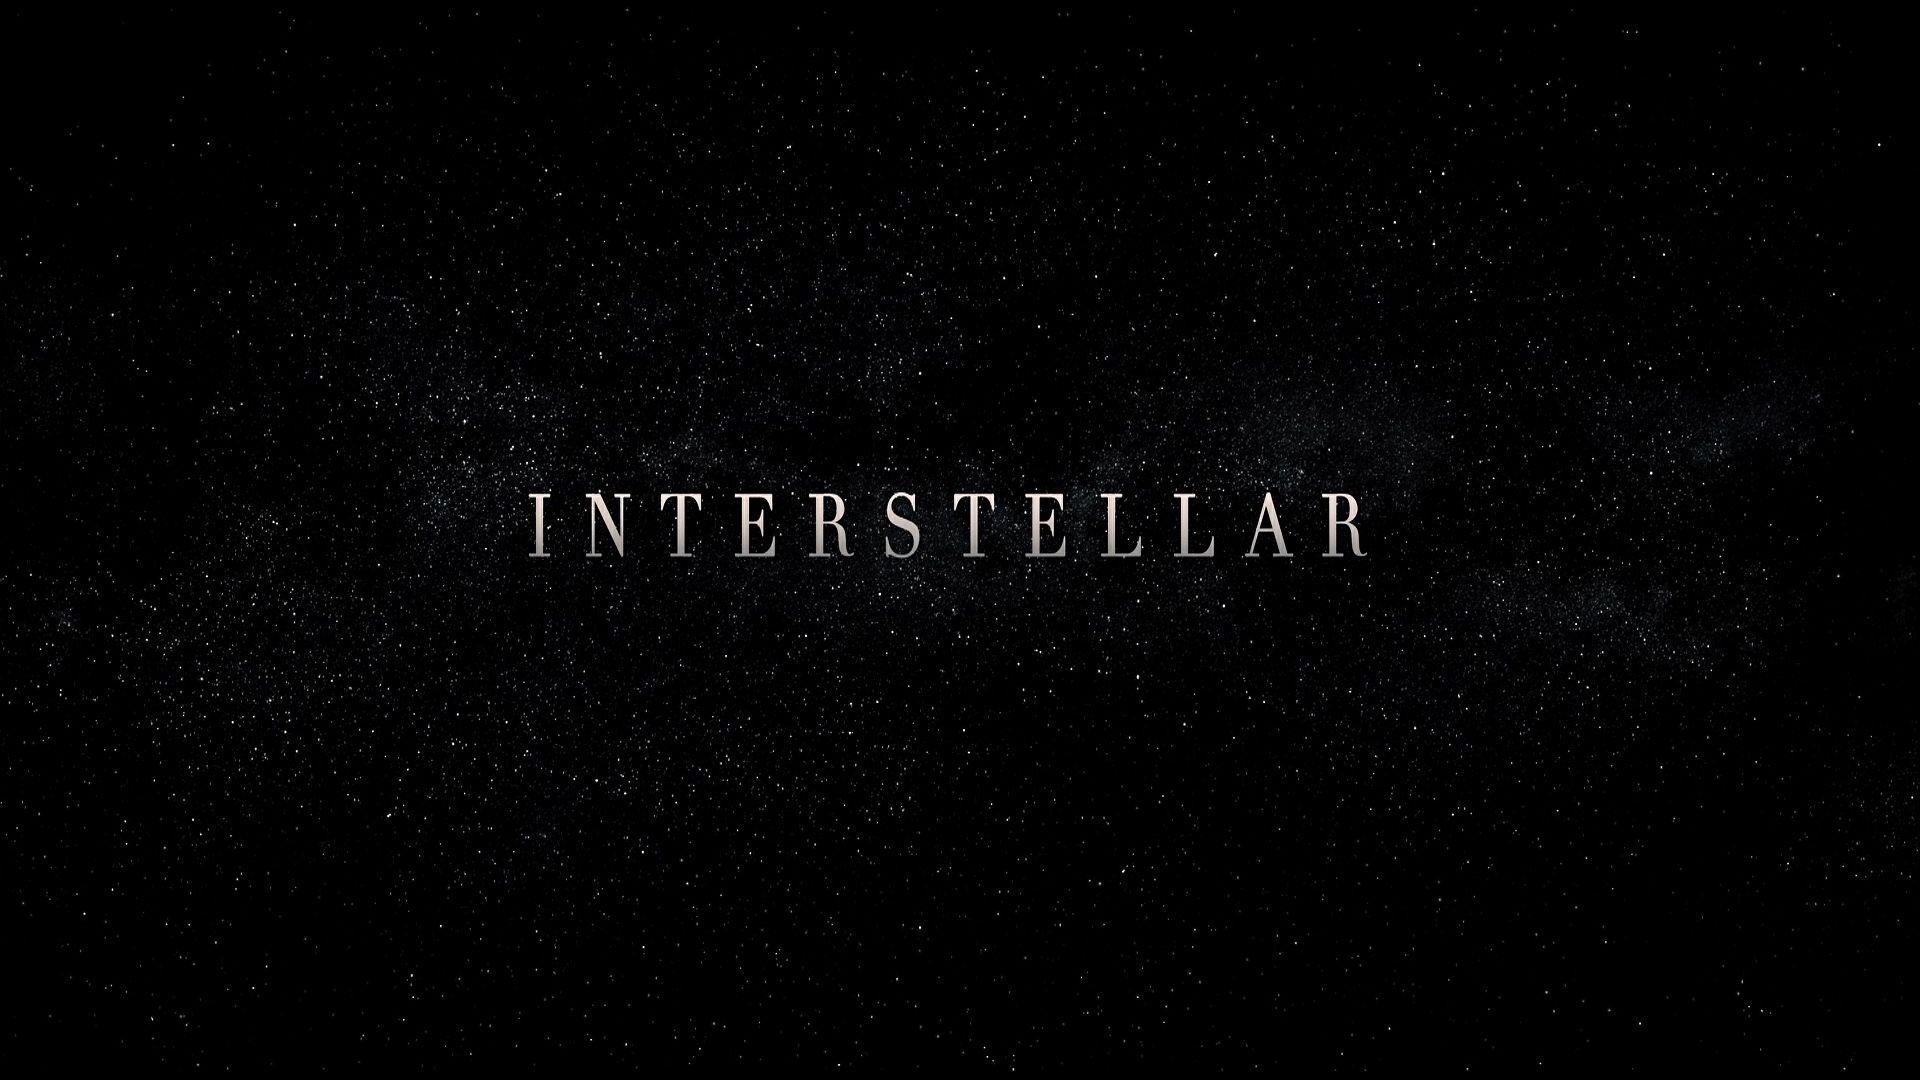 Interstellar HD Wallpaper for desktop download